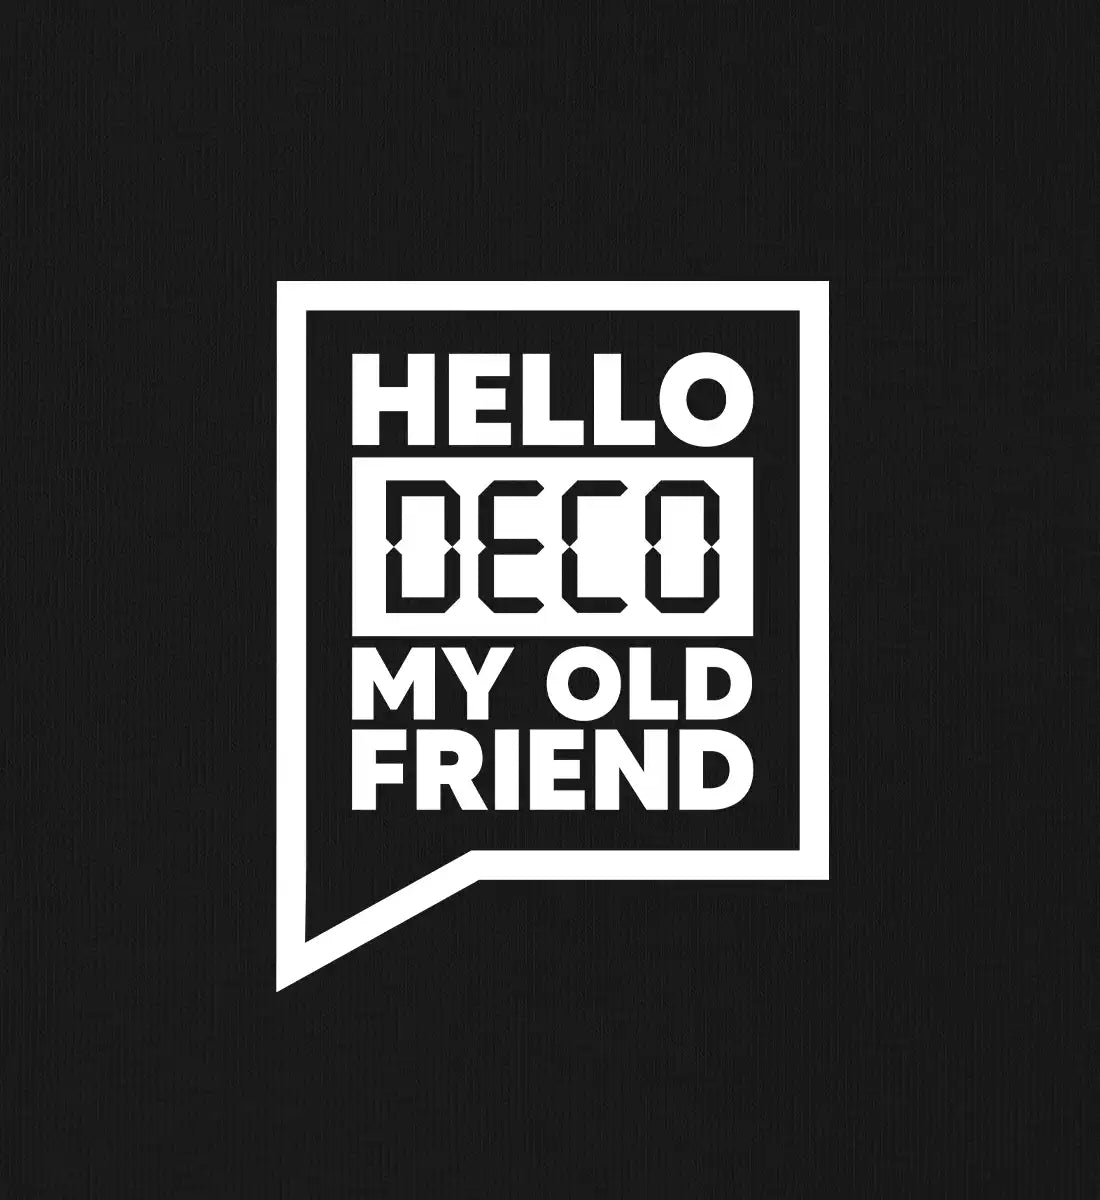 Hello Deco - 100 % Bio Oversized T-Shirt